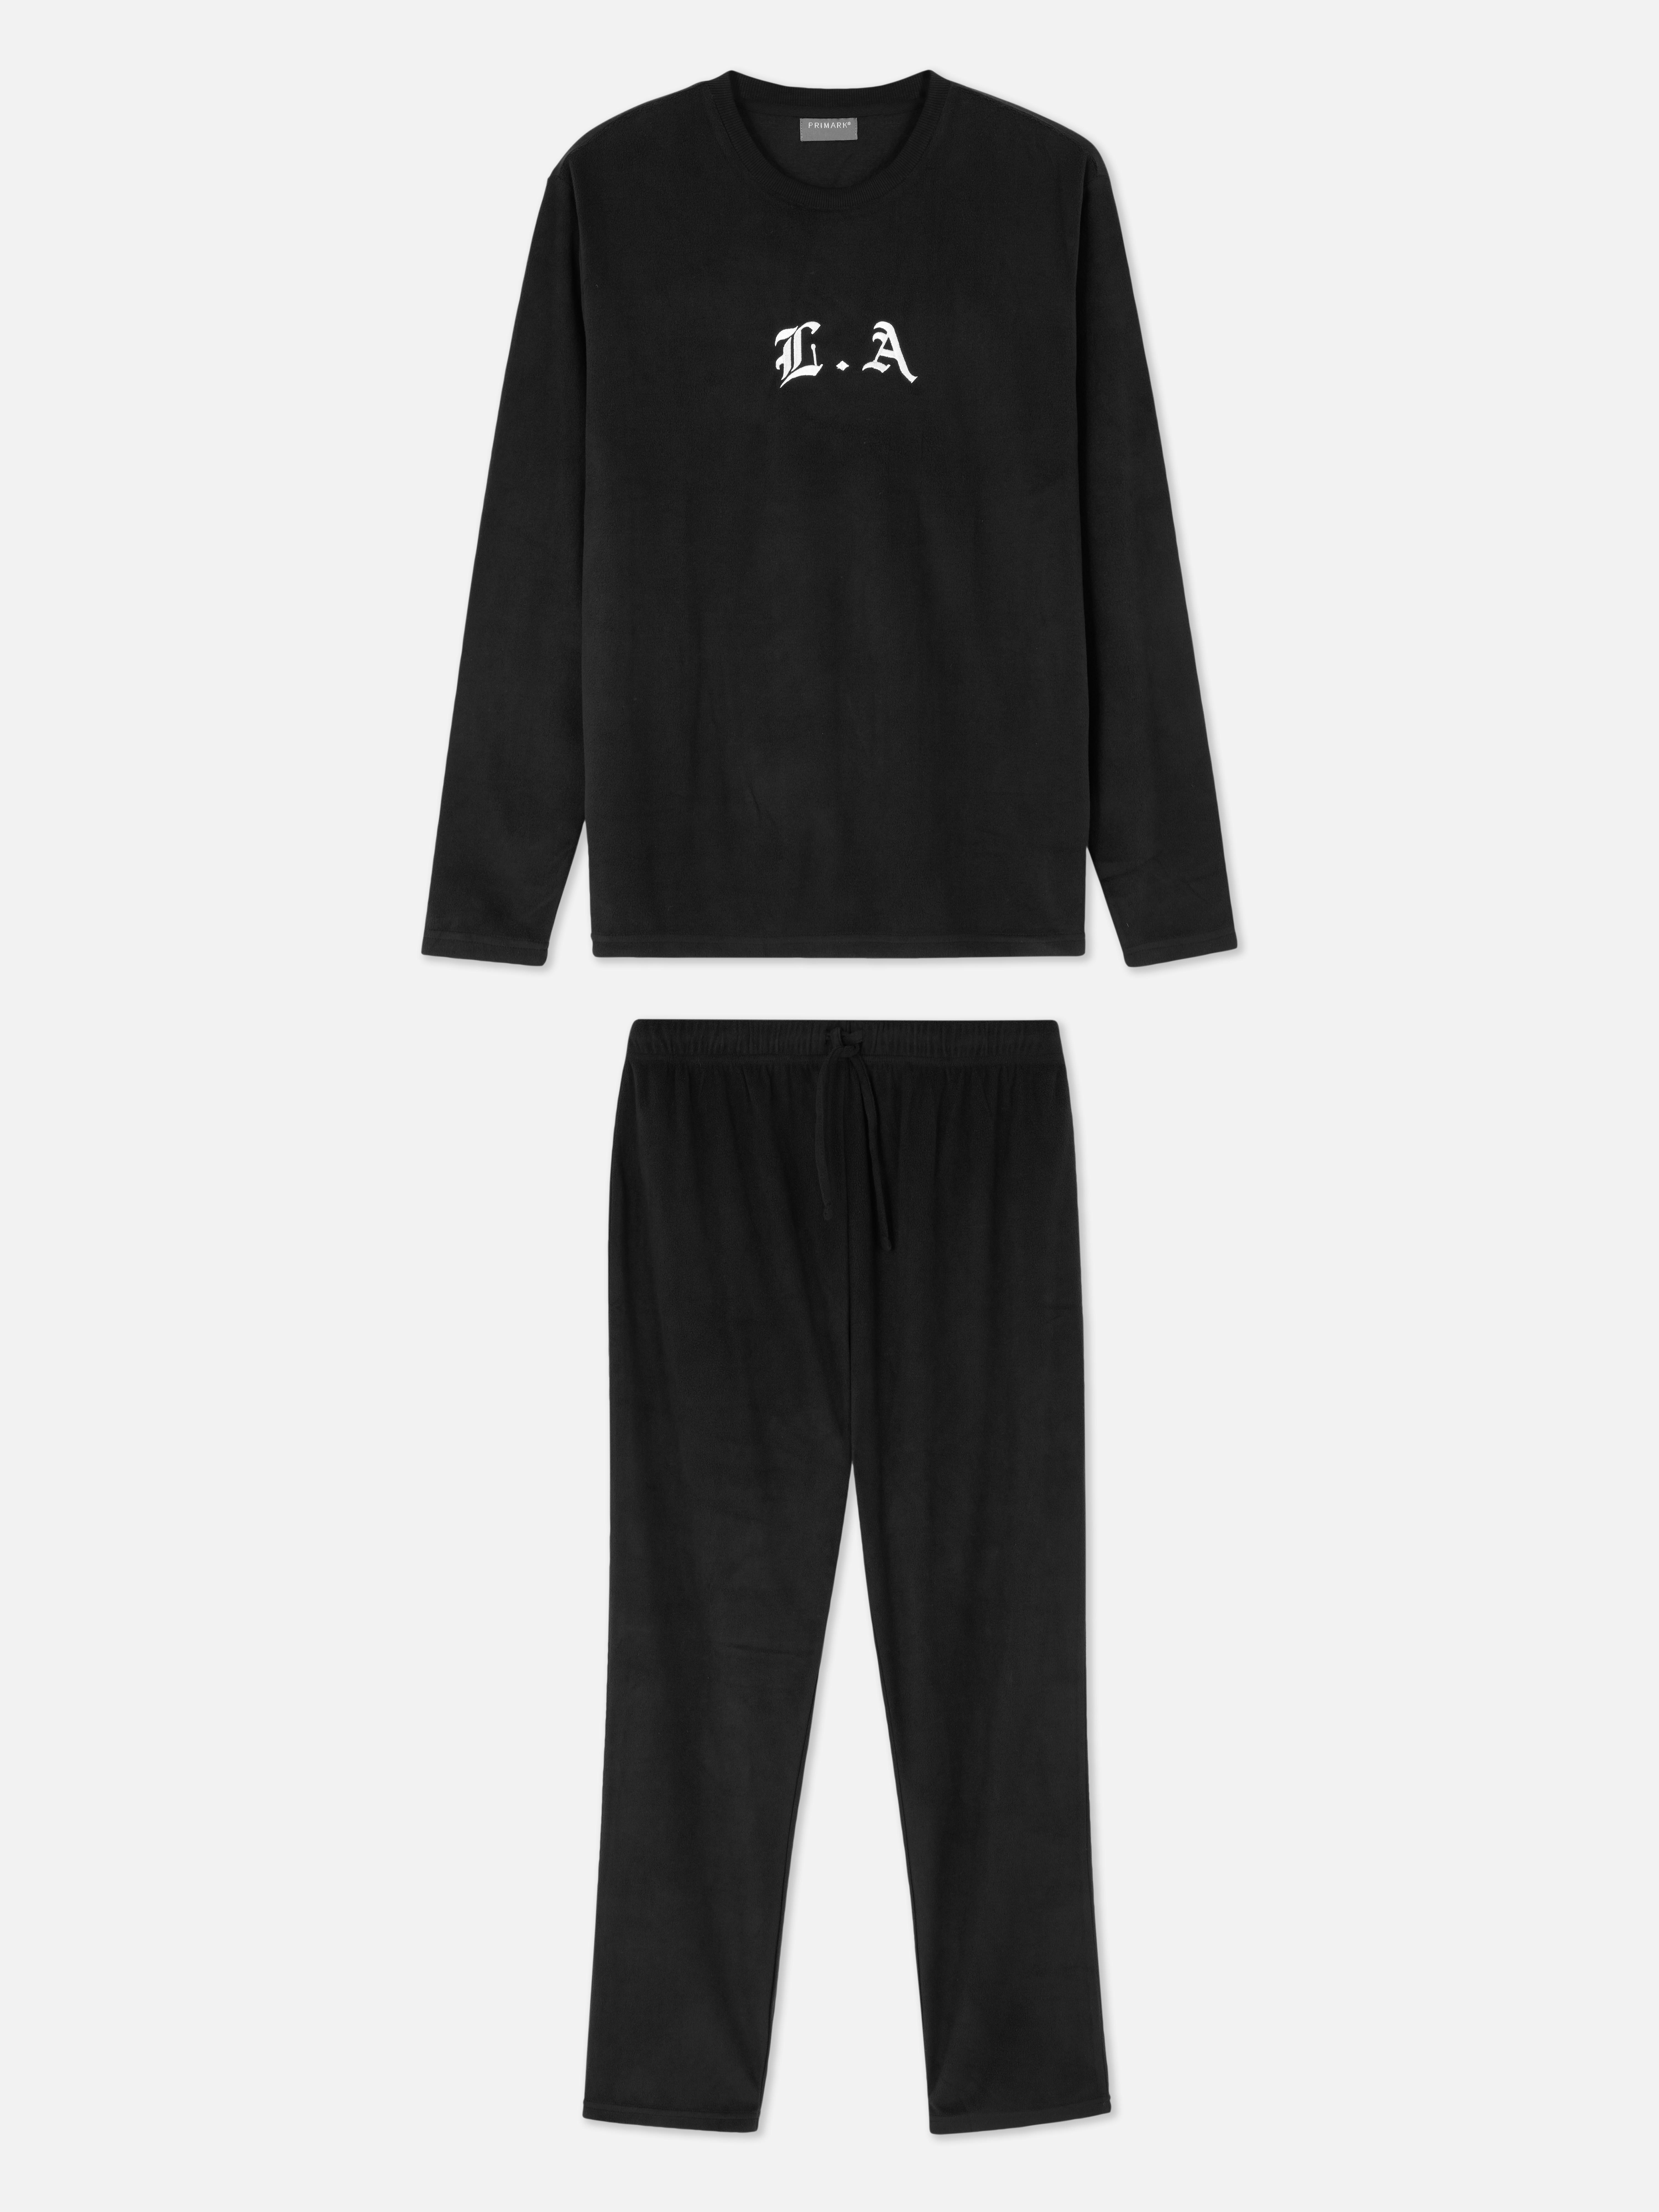 LA Long Sleeve Pyjama Set